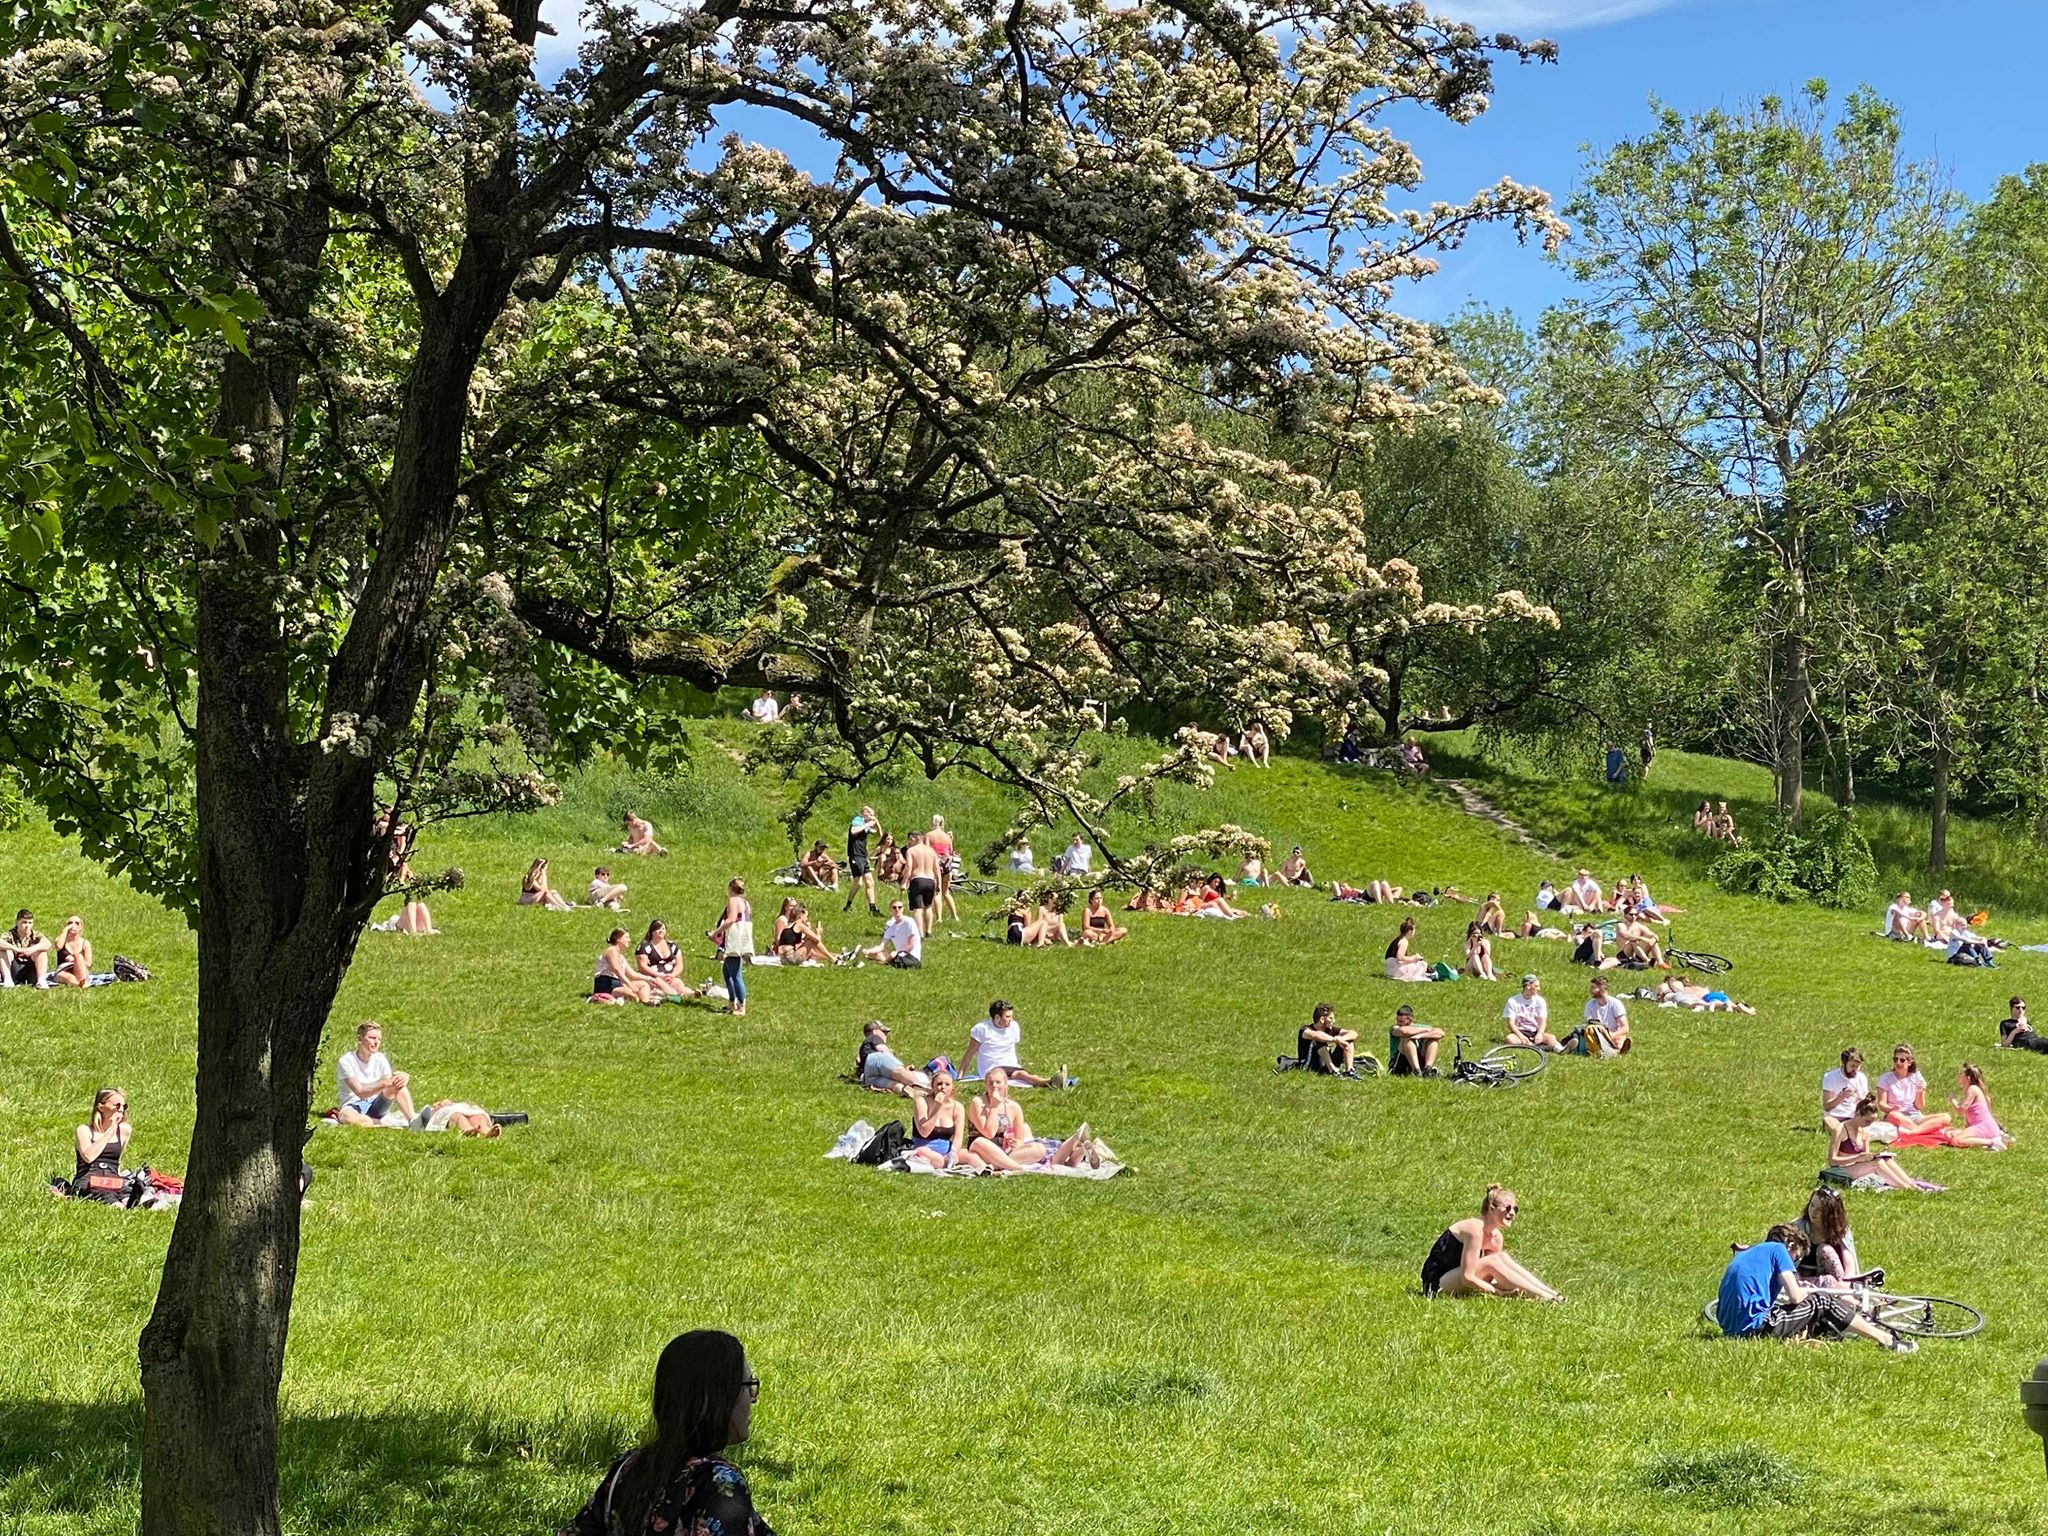 Sunbathers gather at Kelvingrove Park in Glasgow.